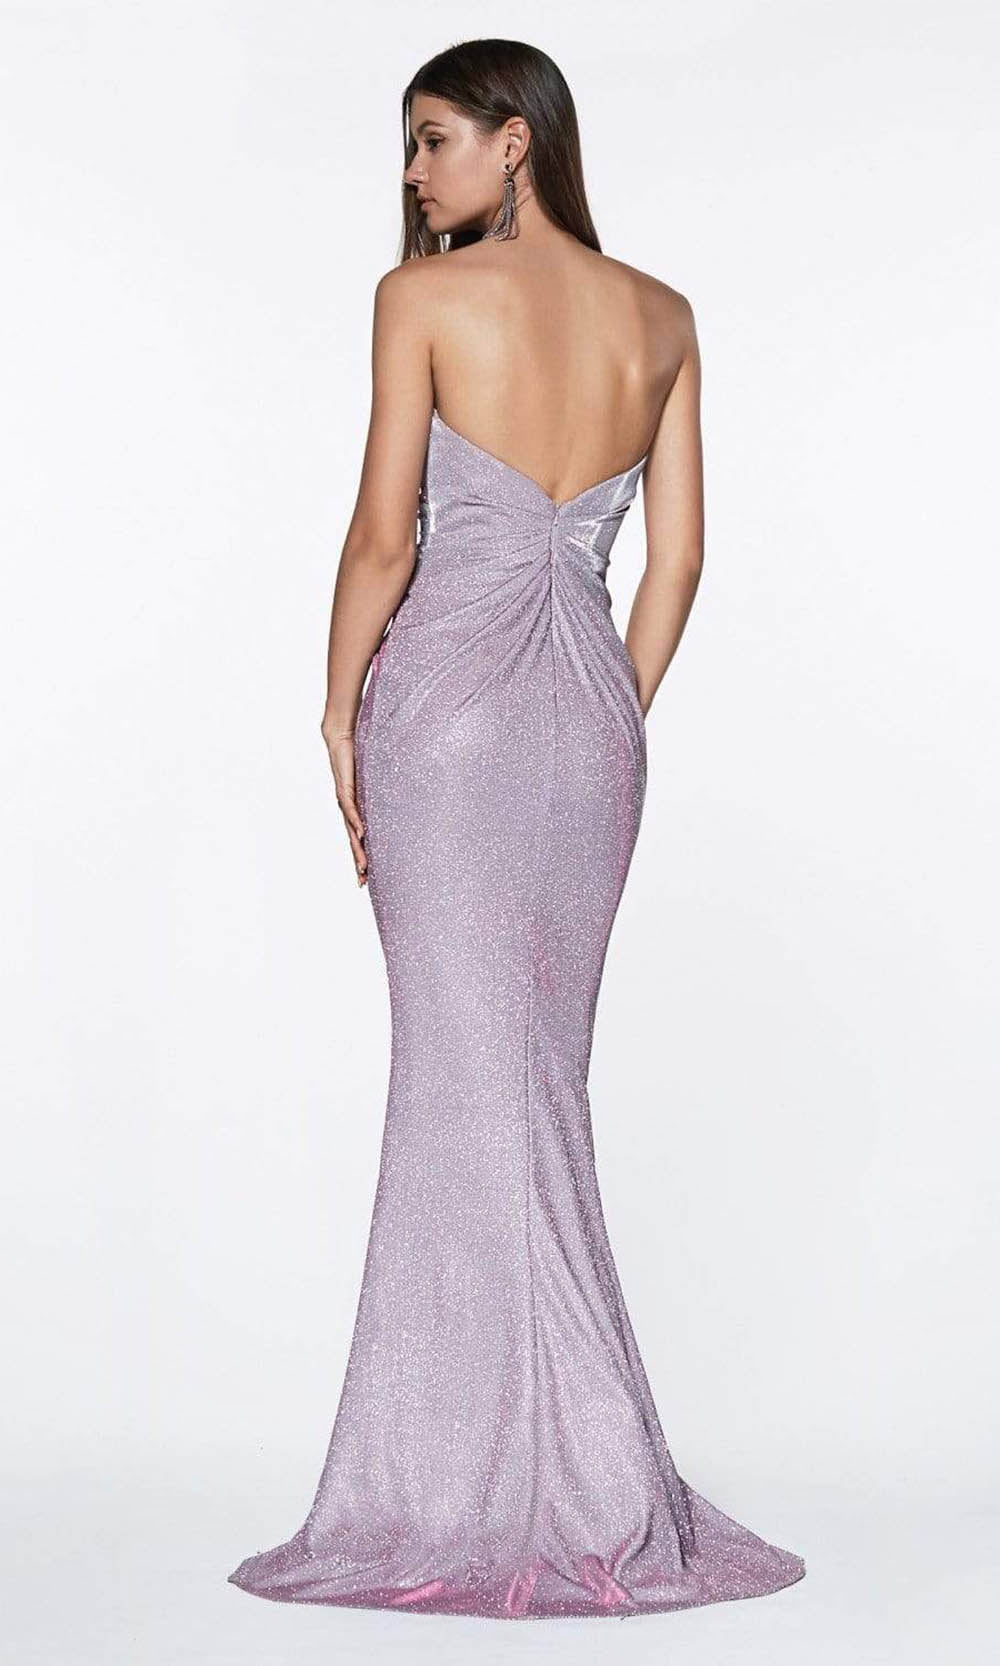 Cinderella Divine - CE0019 Strapless Long Glitter Metallic High Slit Gown - 1 pc Lavender In Size XL Available CCSALE XL / Lavender